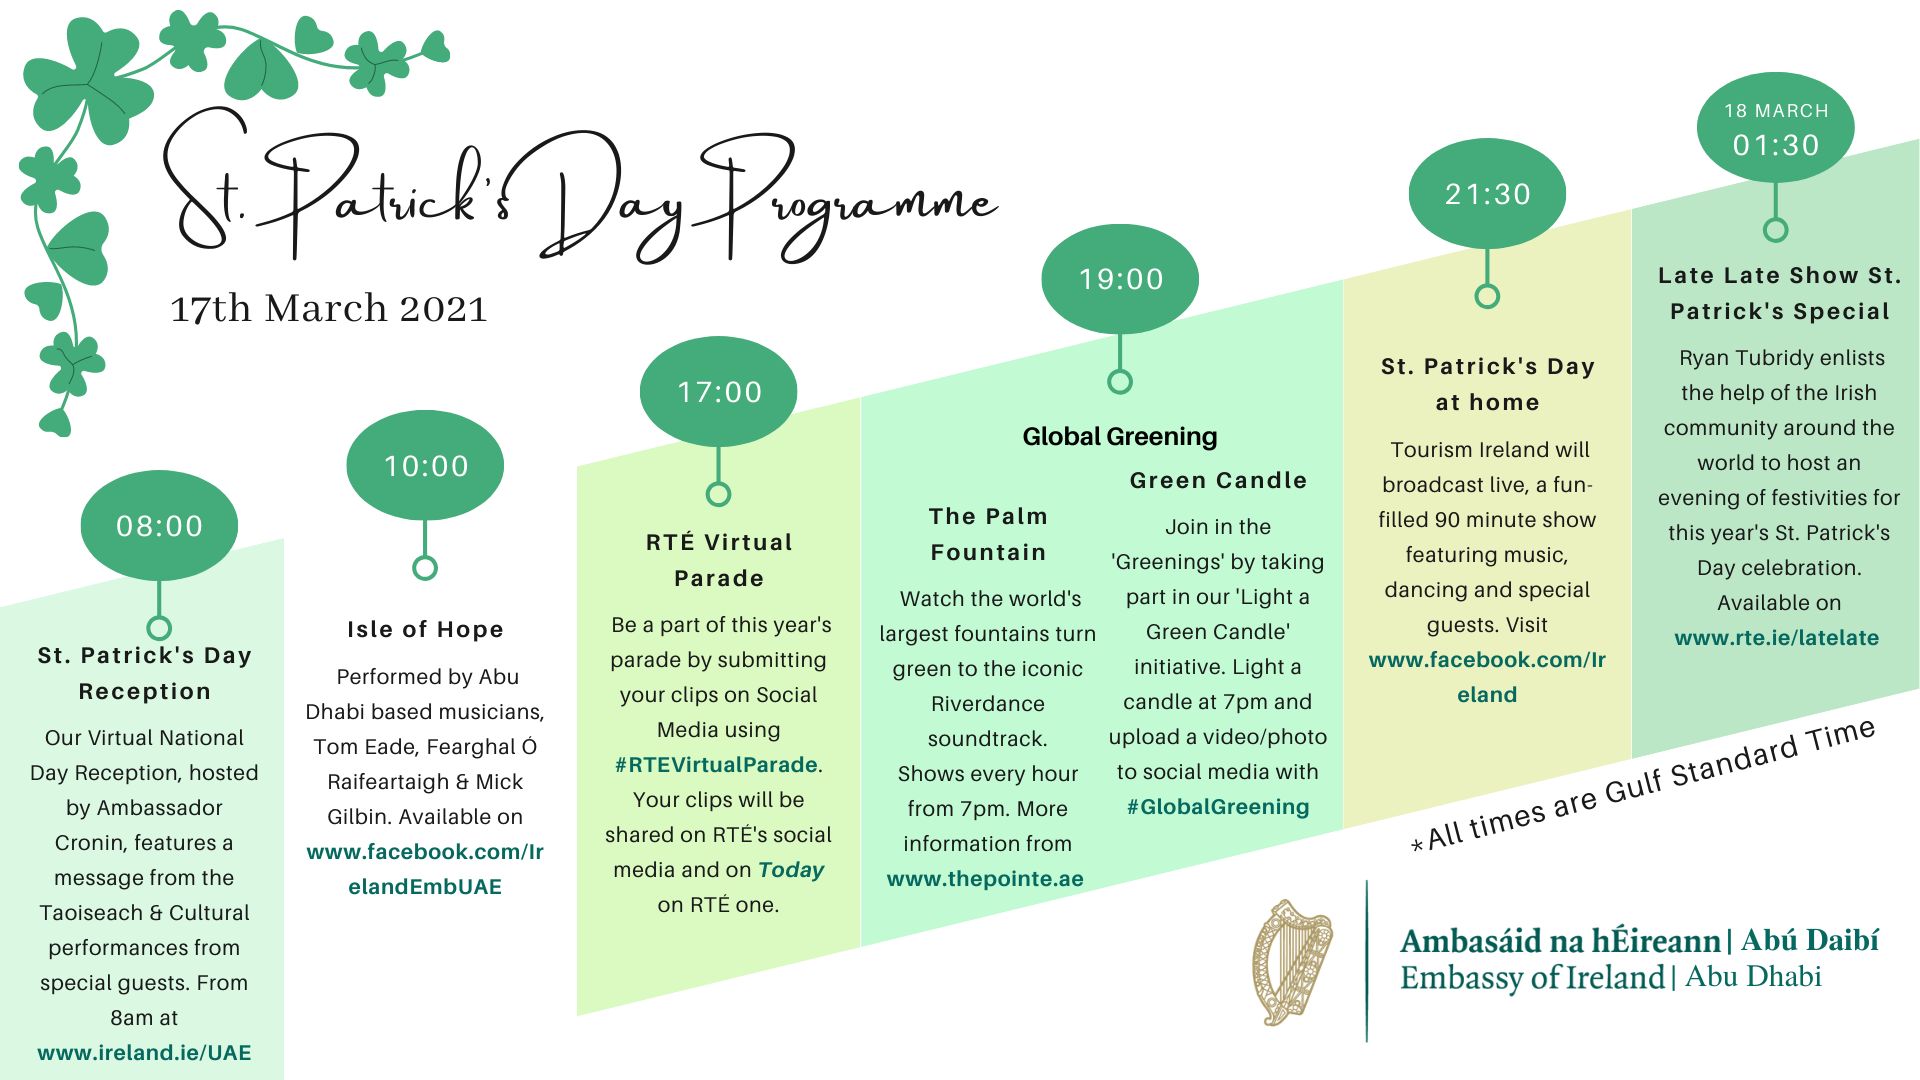 St. Patrick's Day 2021 Events Programme